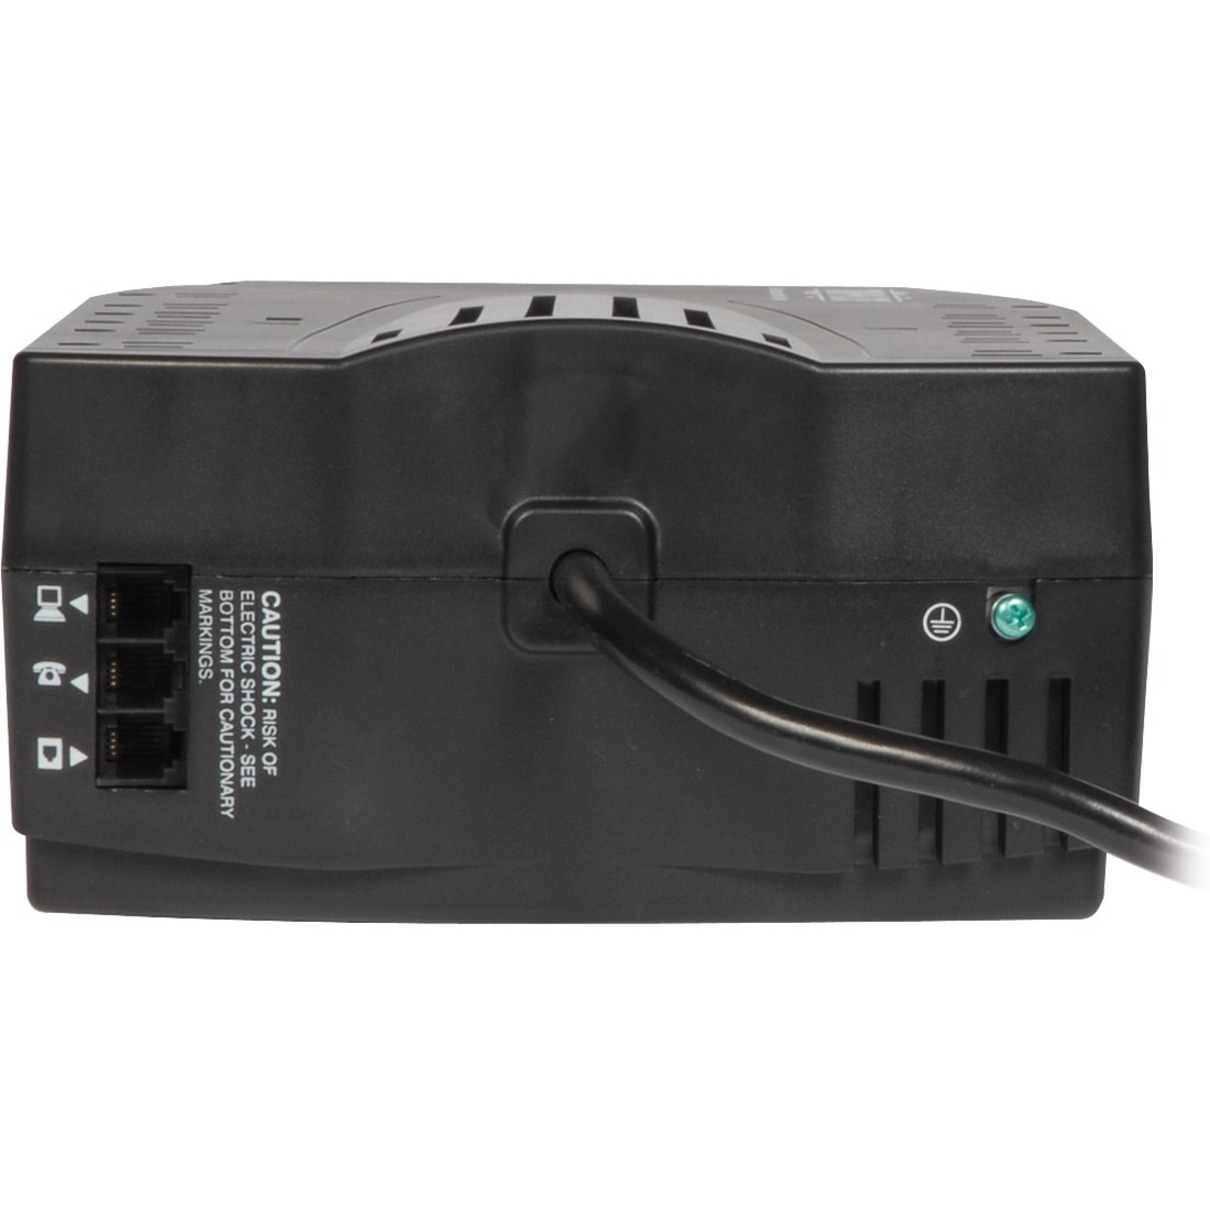 Tripp Lite by Eaton UPS 750VA 450W Desktop Battery Back Up AVR Compact 120V USB RJ11 TAA - image 2 of 9